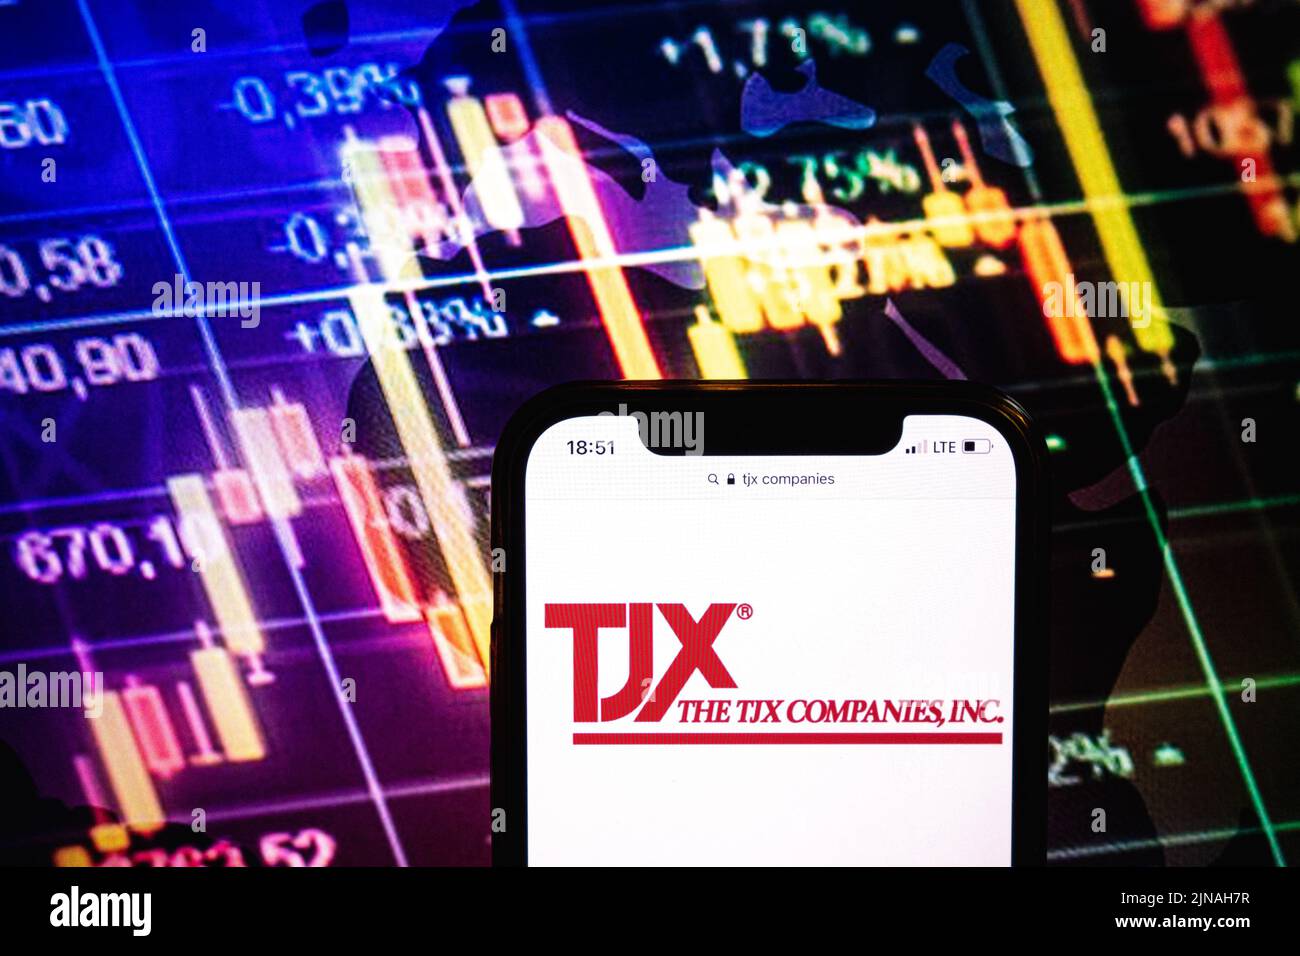 KONSKIE, POLAND - August 09, 2022: Smartphone displaying logo of TJX Companies on stock exchange diagram background Stock Photo